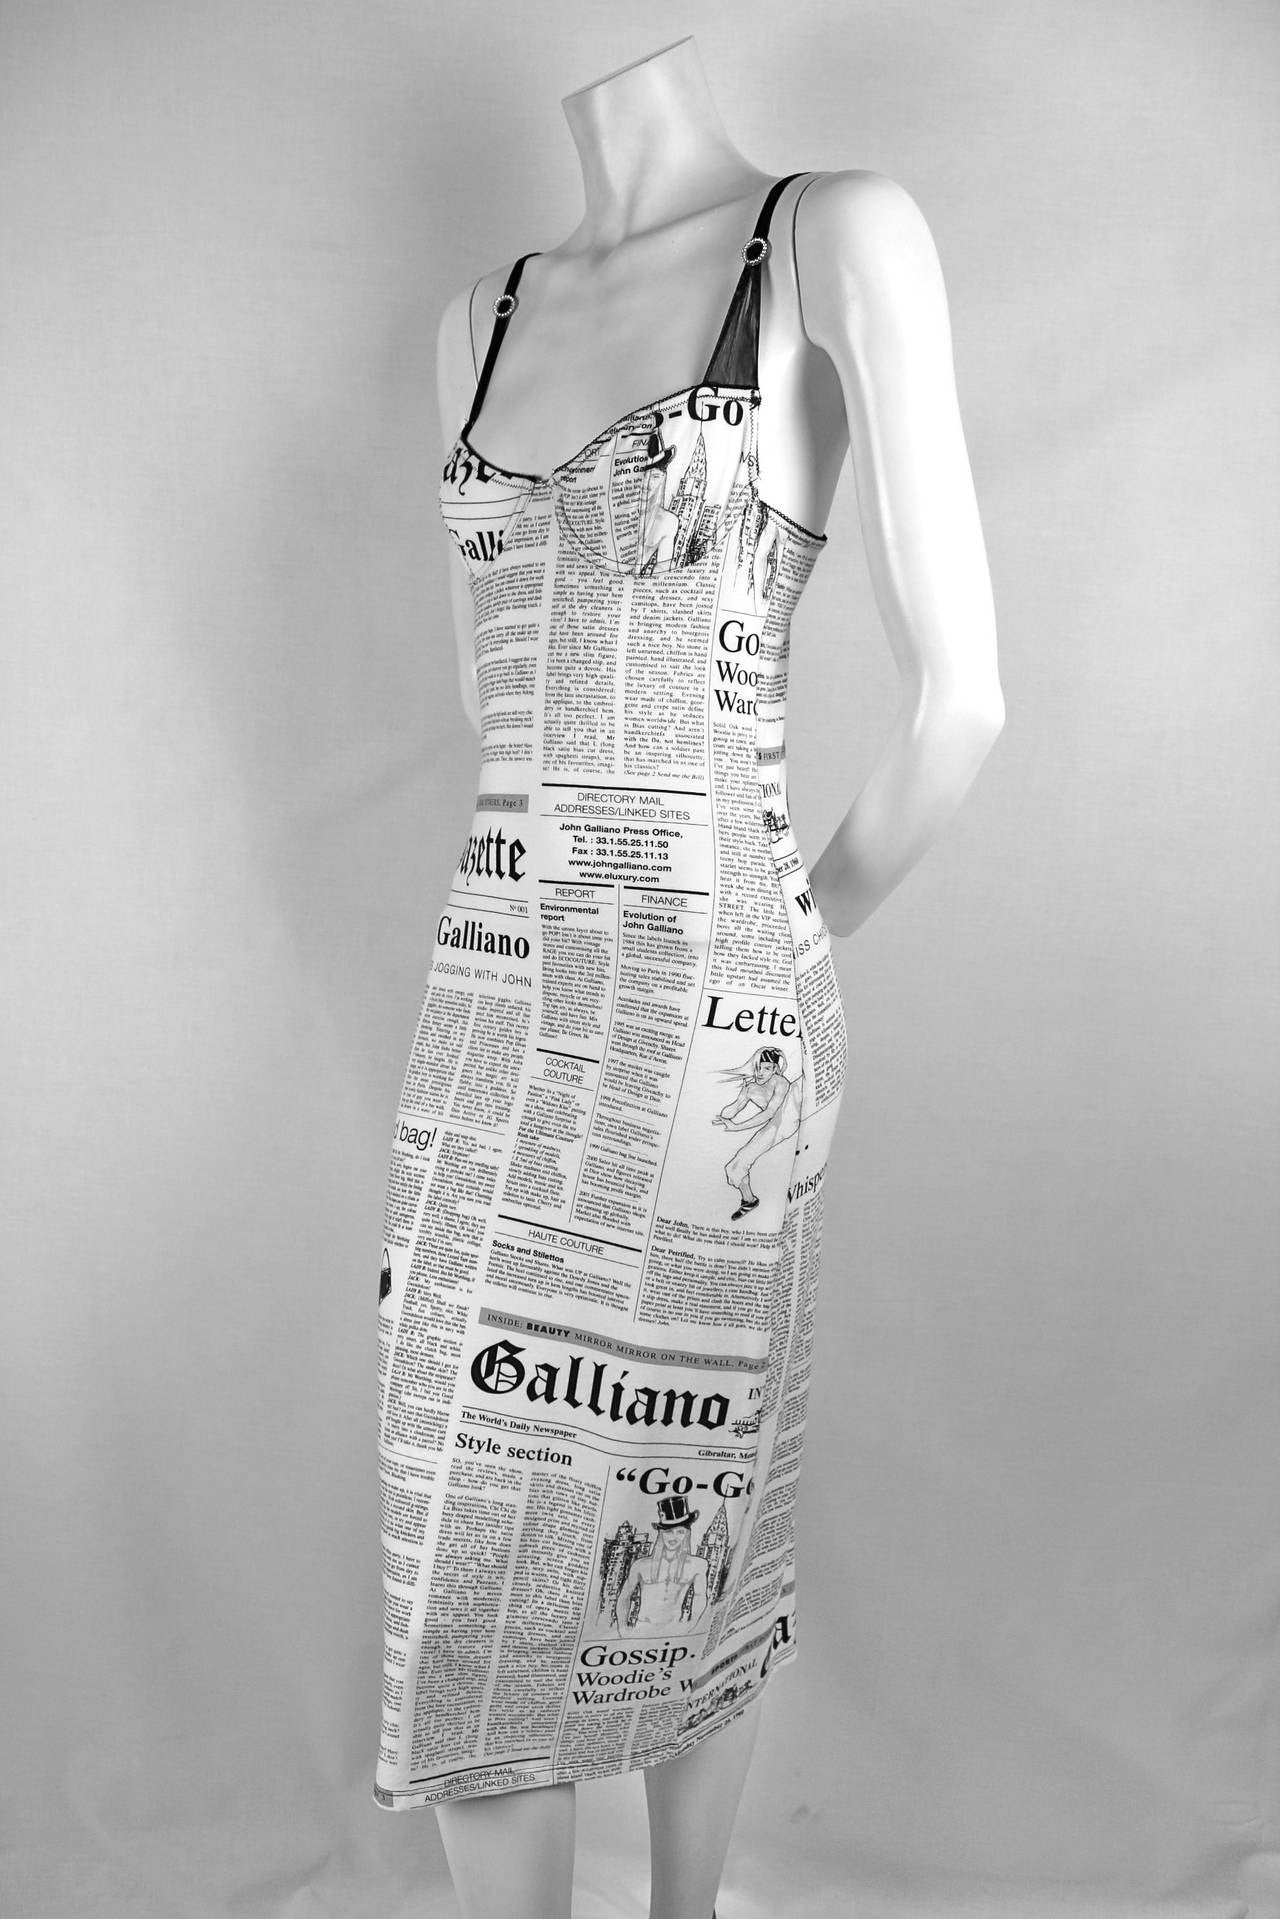 1990s John Galliano Newspaper Print Under-wired Sheath Dress
Adjustable straps
Size Small